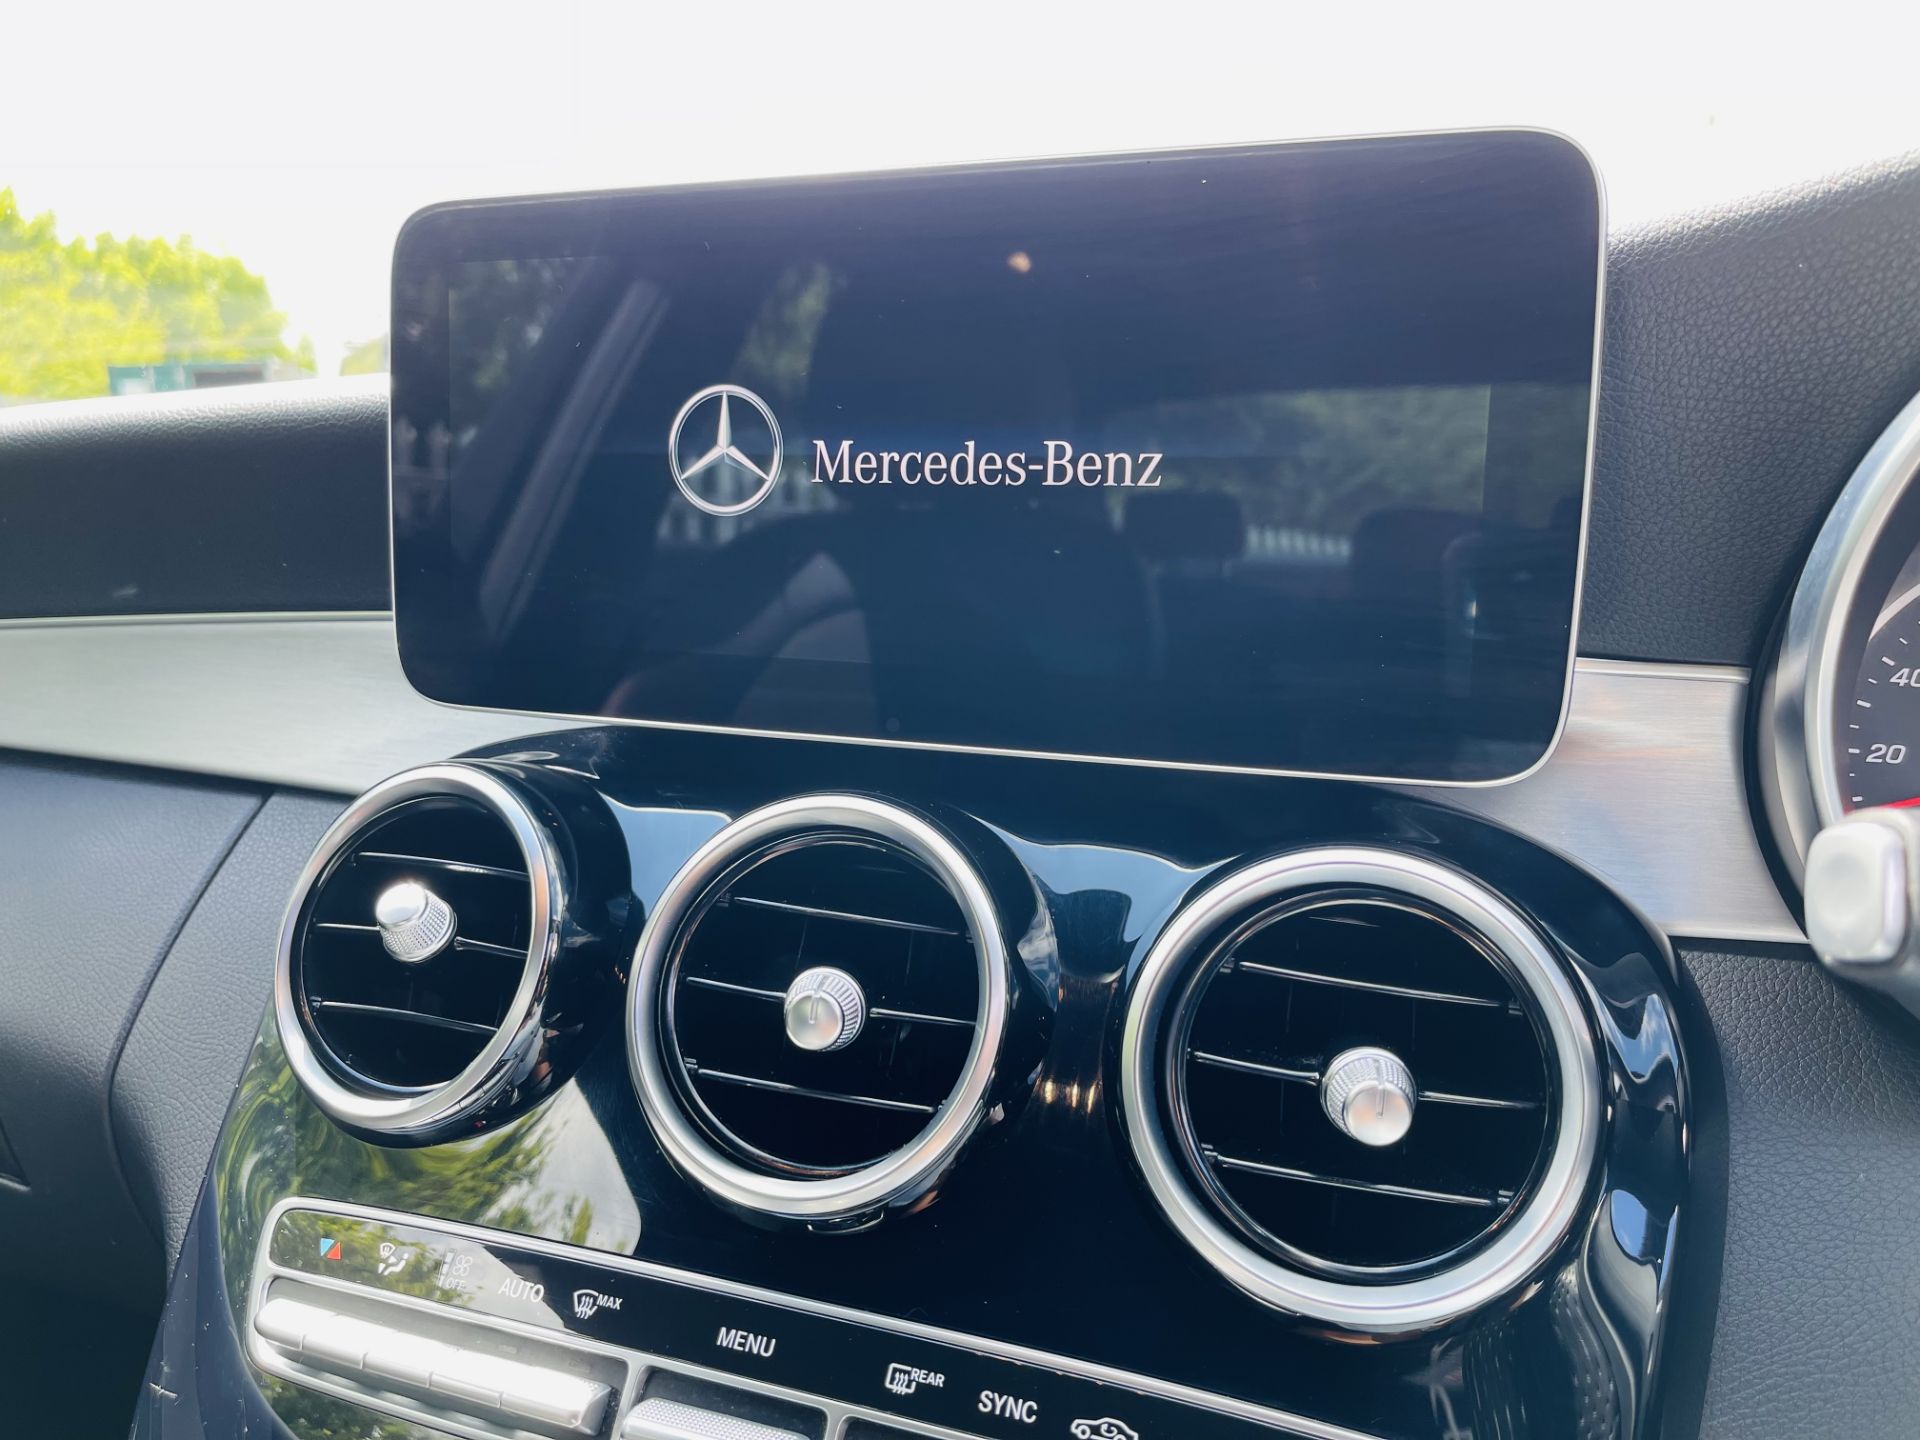 ** ON SALE ** Mercedes Benz C220 AMG Line 9G-Tronic Auto 2019 ‘69 Reg’ - Sat Nav - A/C - Euro 6 - Image 33 of 39